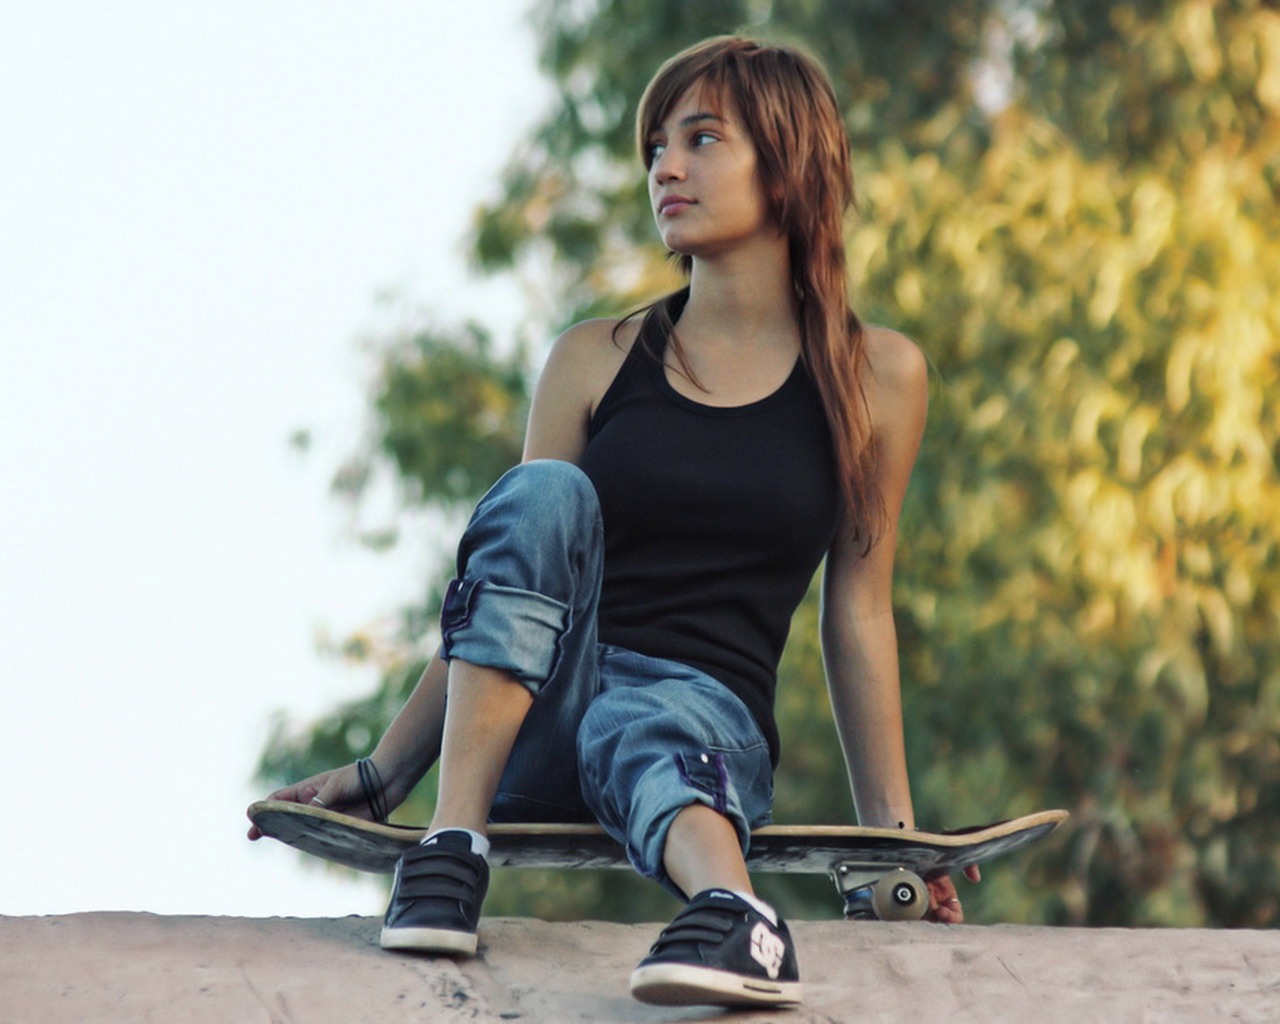 Fondos de Pantalla Skateboard Chicas descargar imagenes